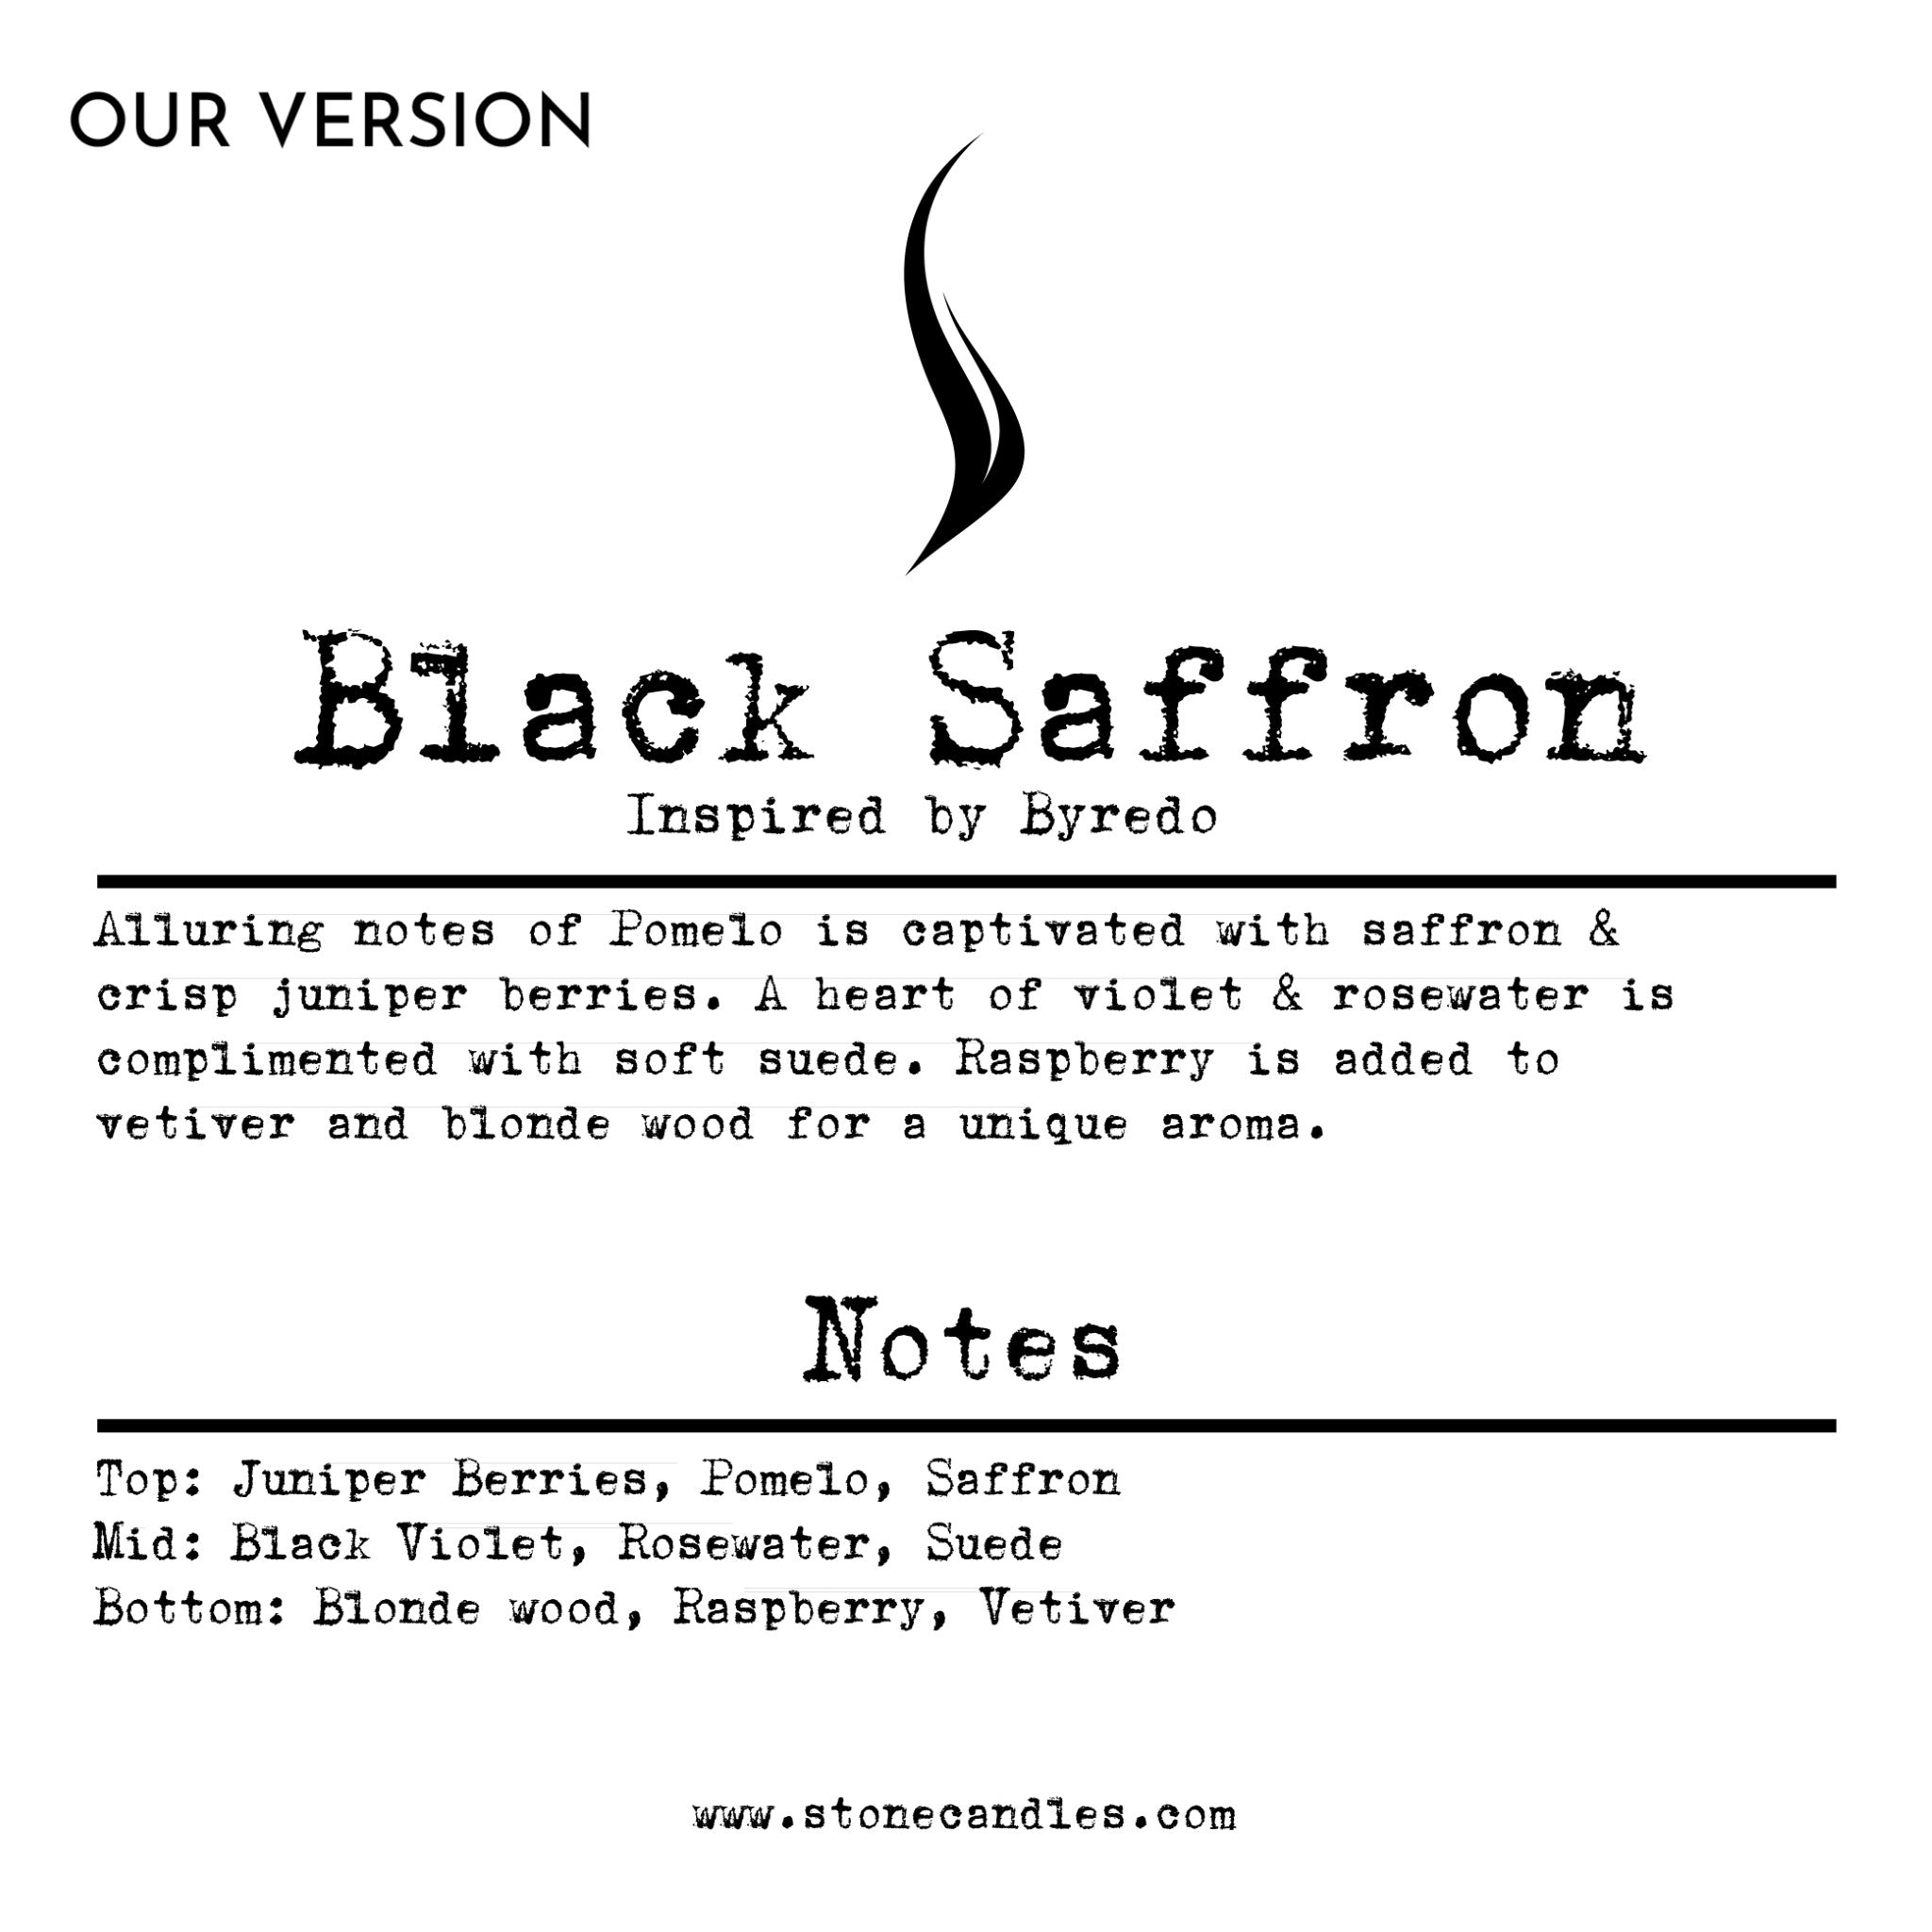 Black Saffron (our version) Sample Scent Strip